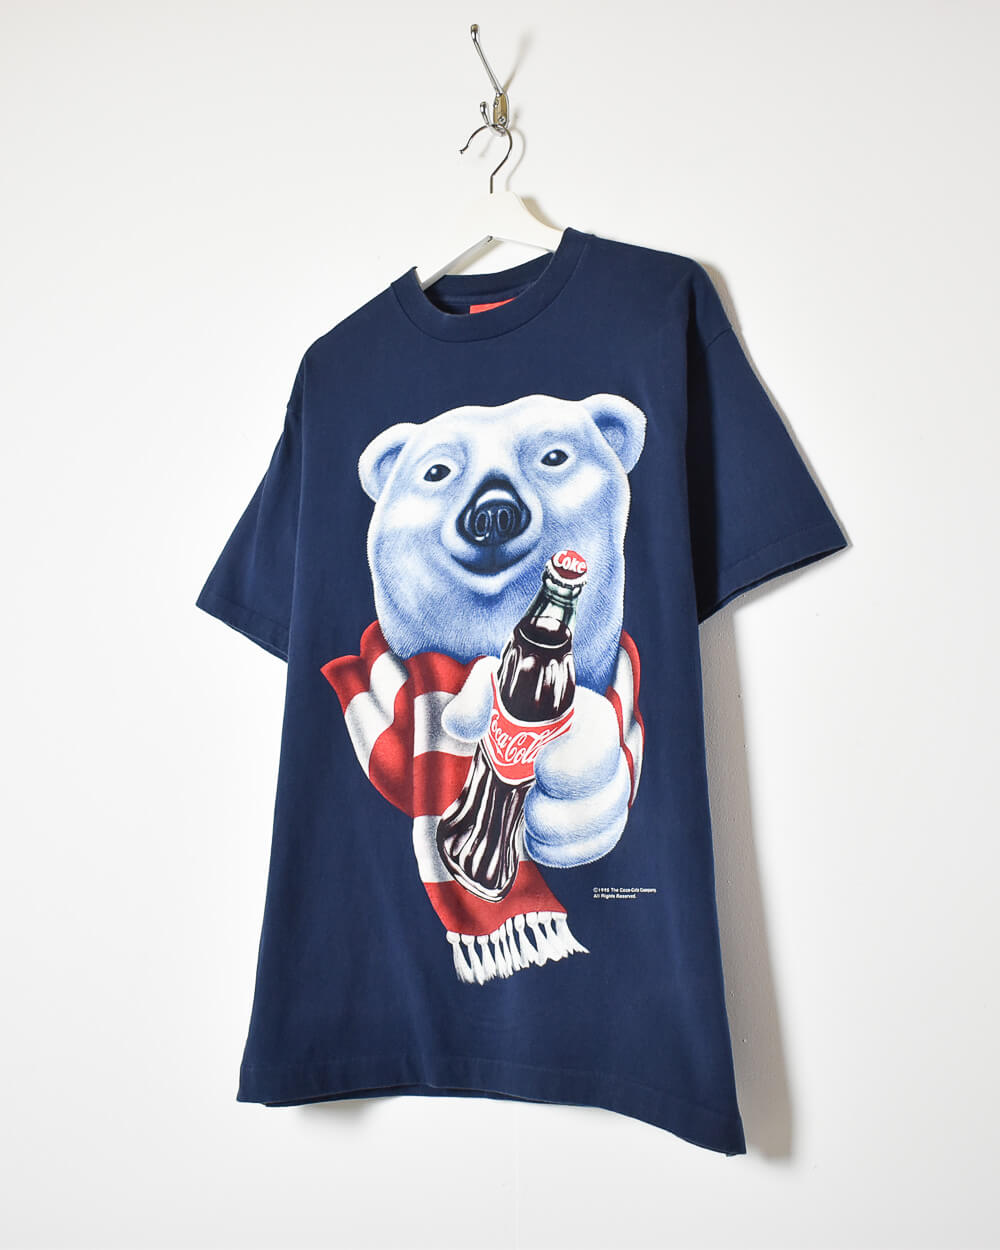 Navy 1994 Coca Cola Bear T-Shirt - Large